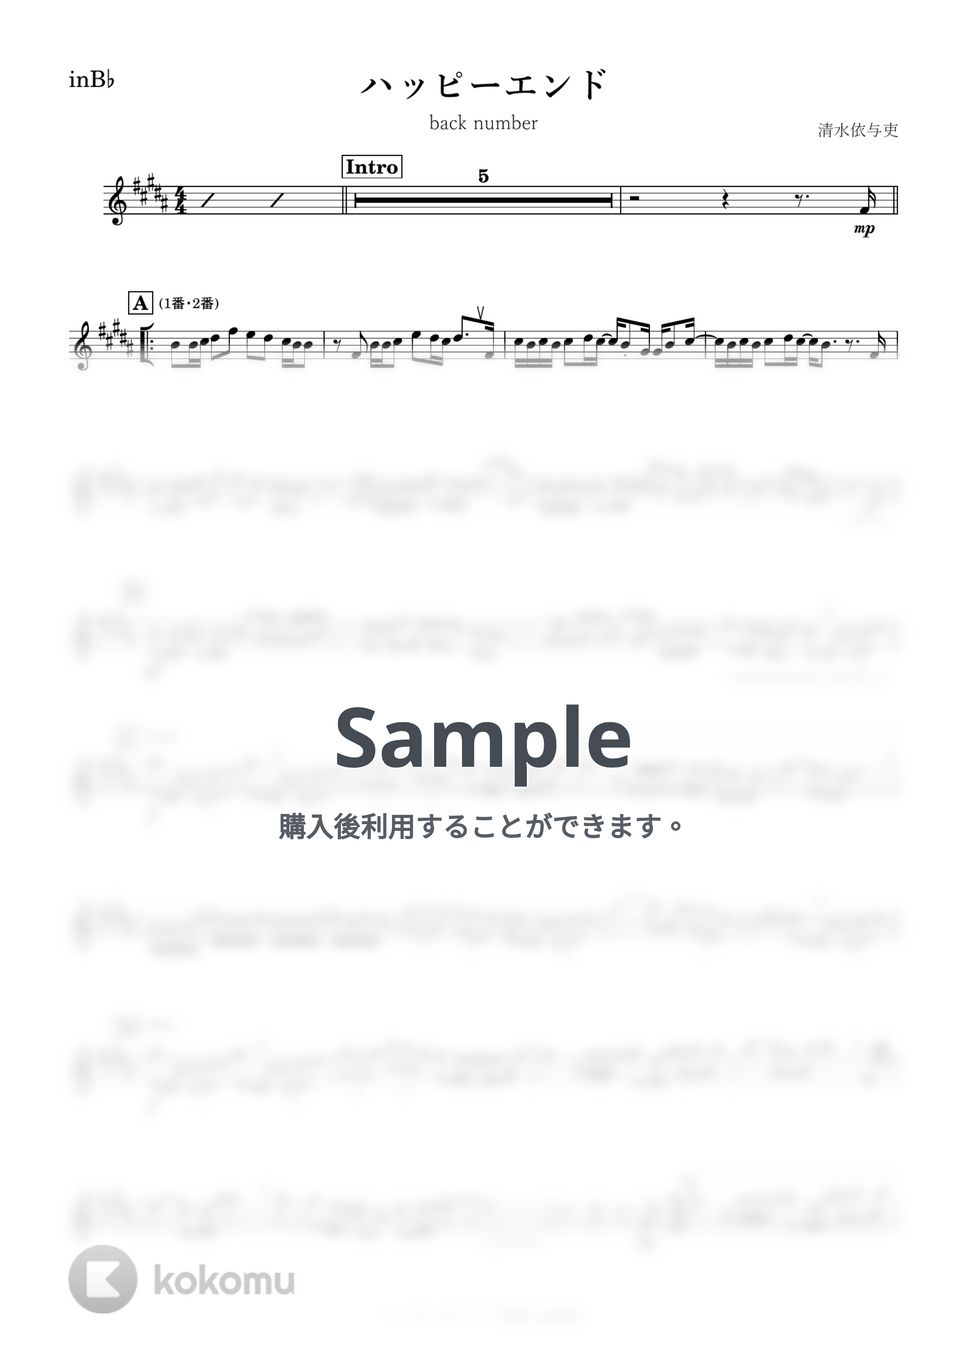 back number - ハッピーエンド (B♭) by kanamusic